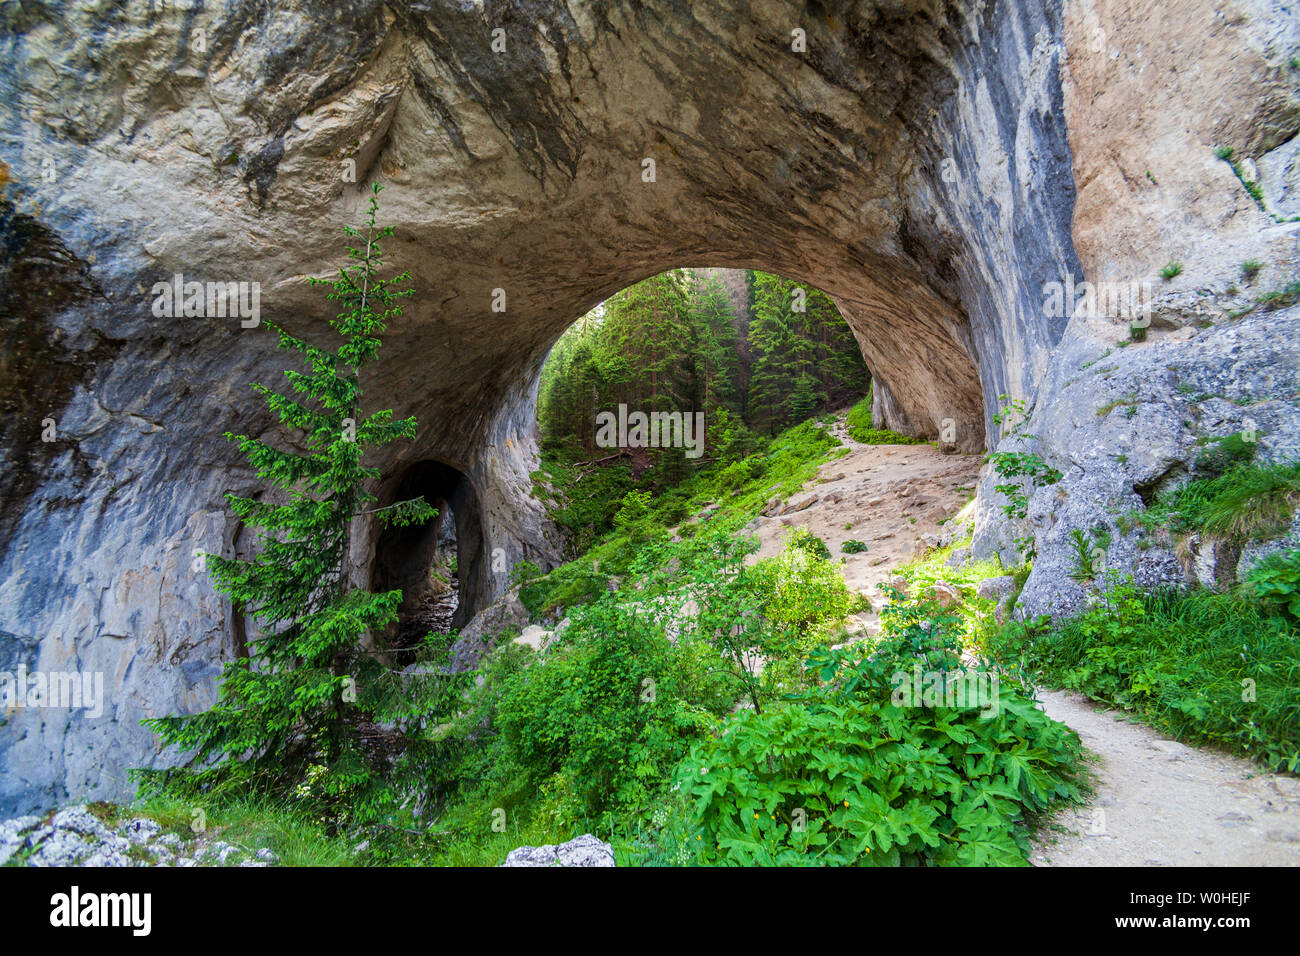 The Wonderful Bridges Smolyan, Bulgaria rock arches and caves Chudnite mostove Stock Photo